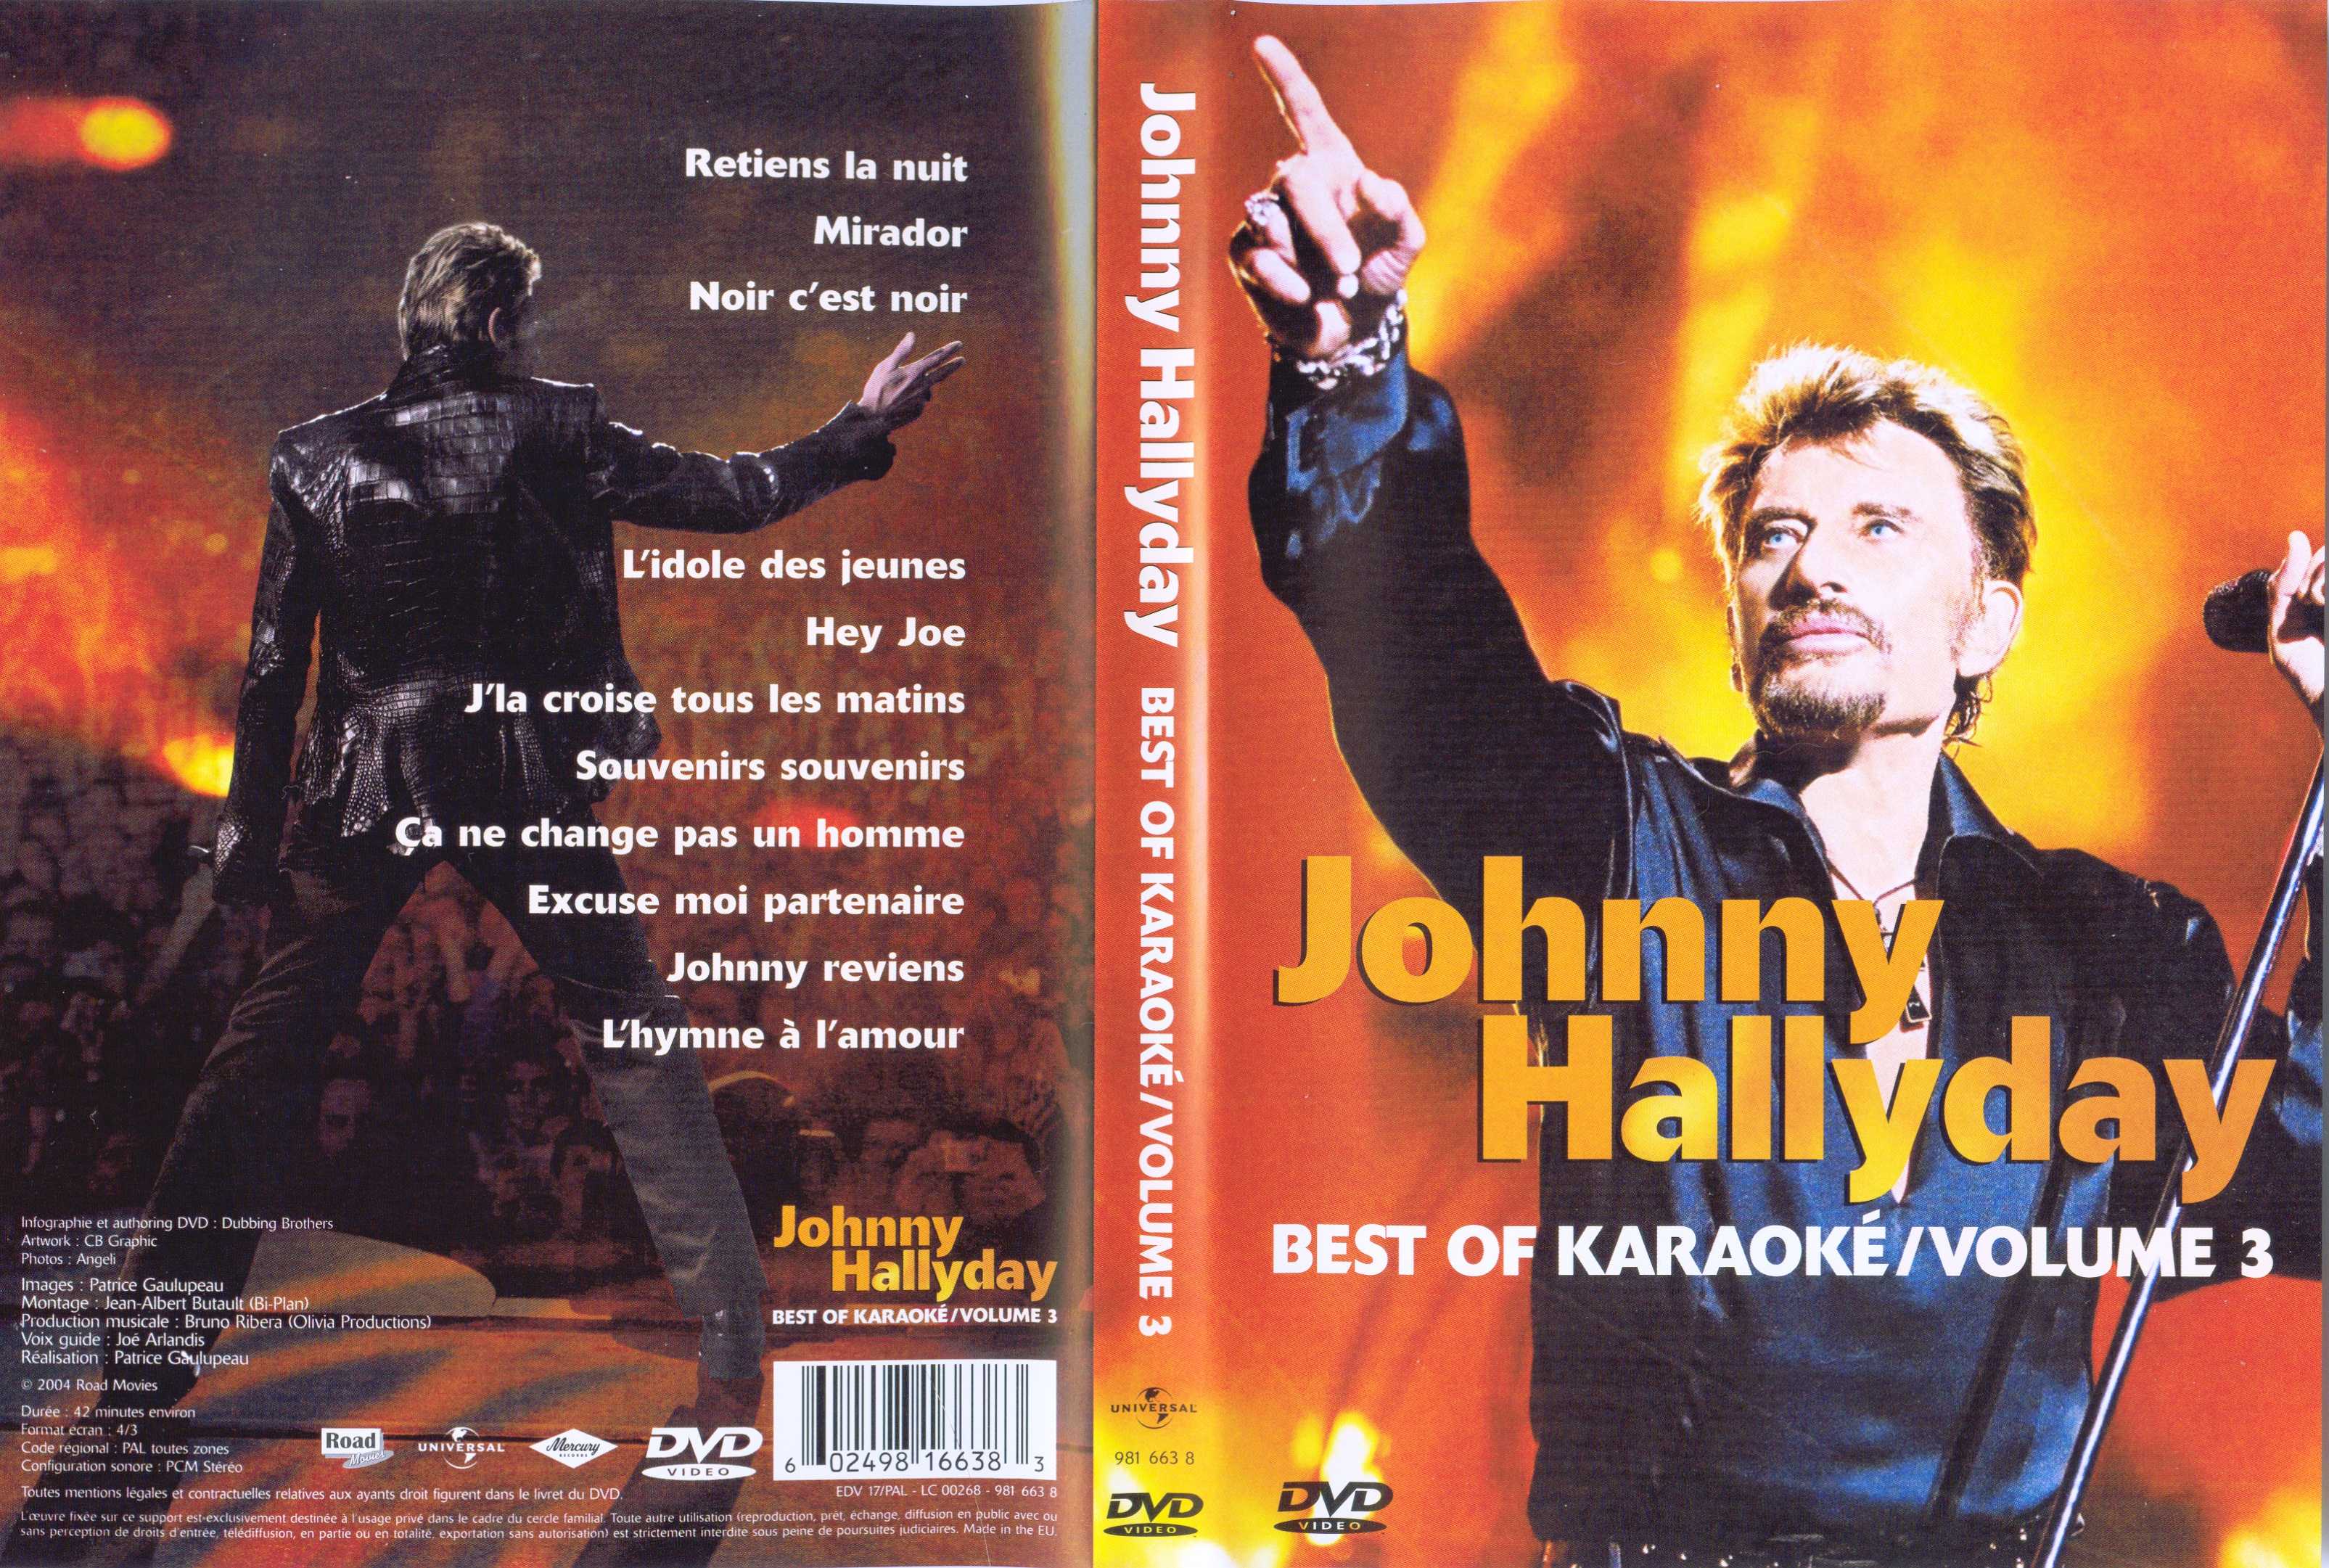 Jaquette DVD Johnny hallyday - best of karaoke vol 3